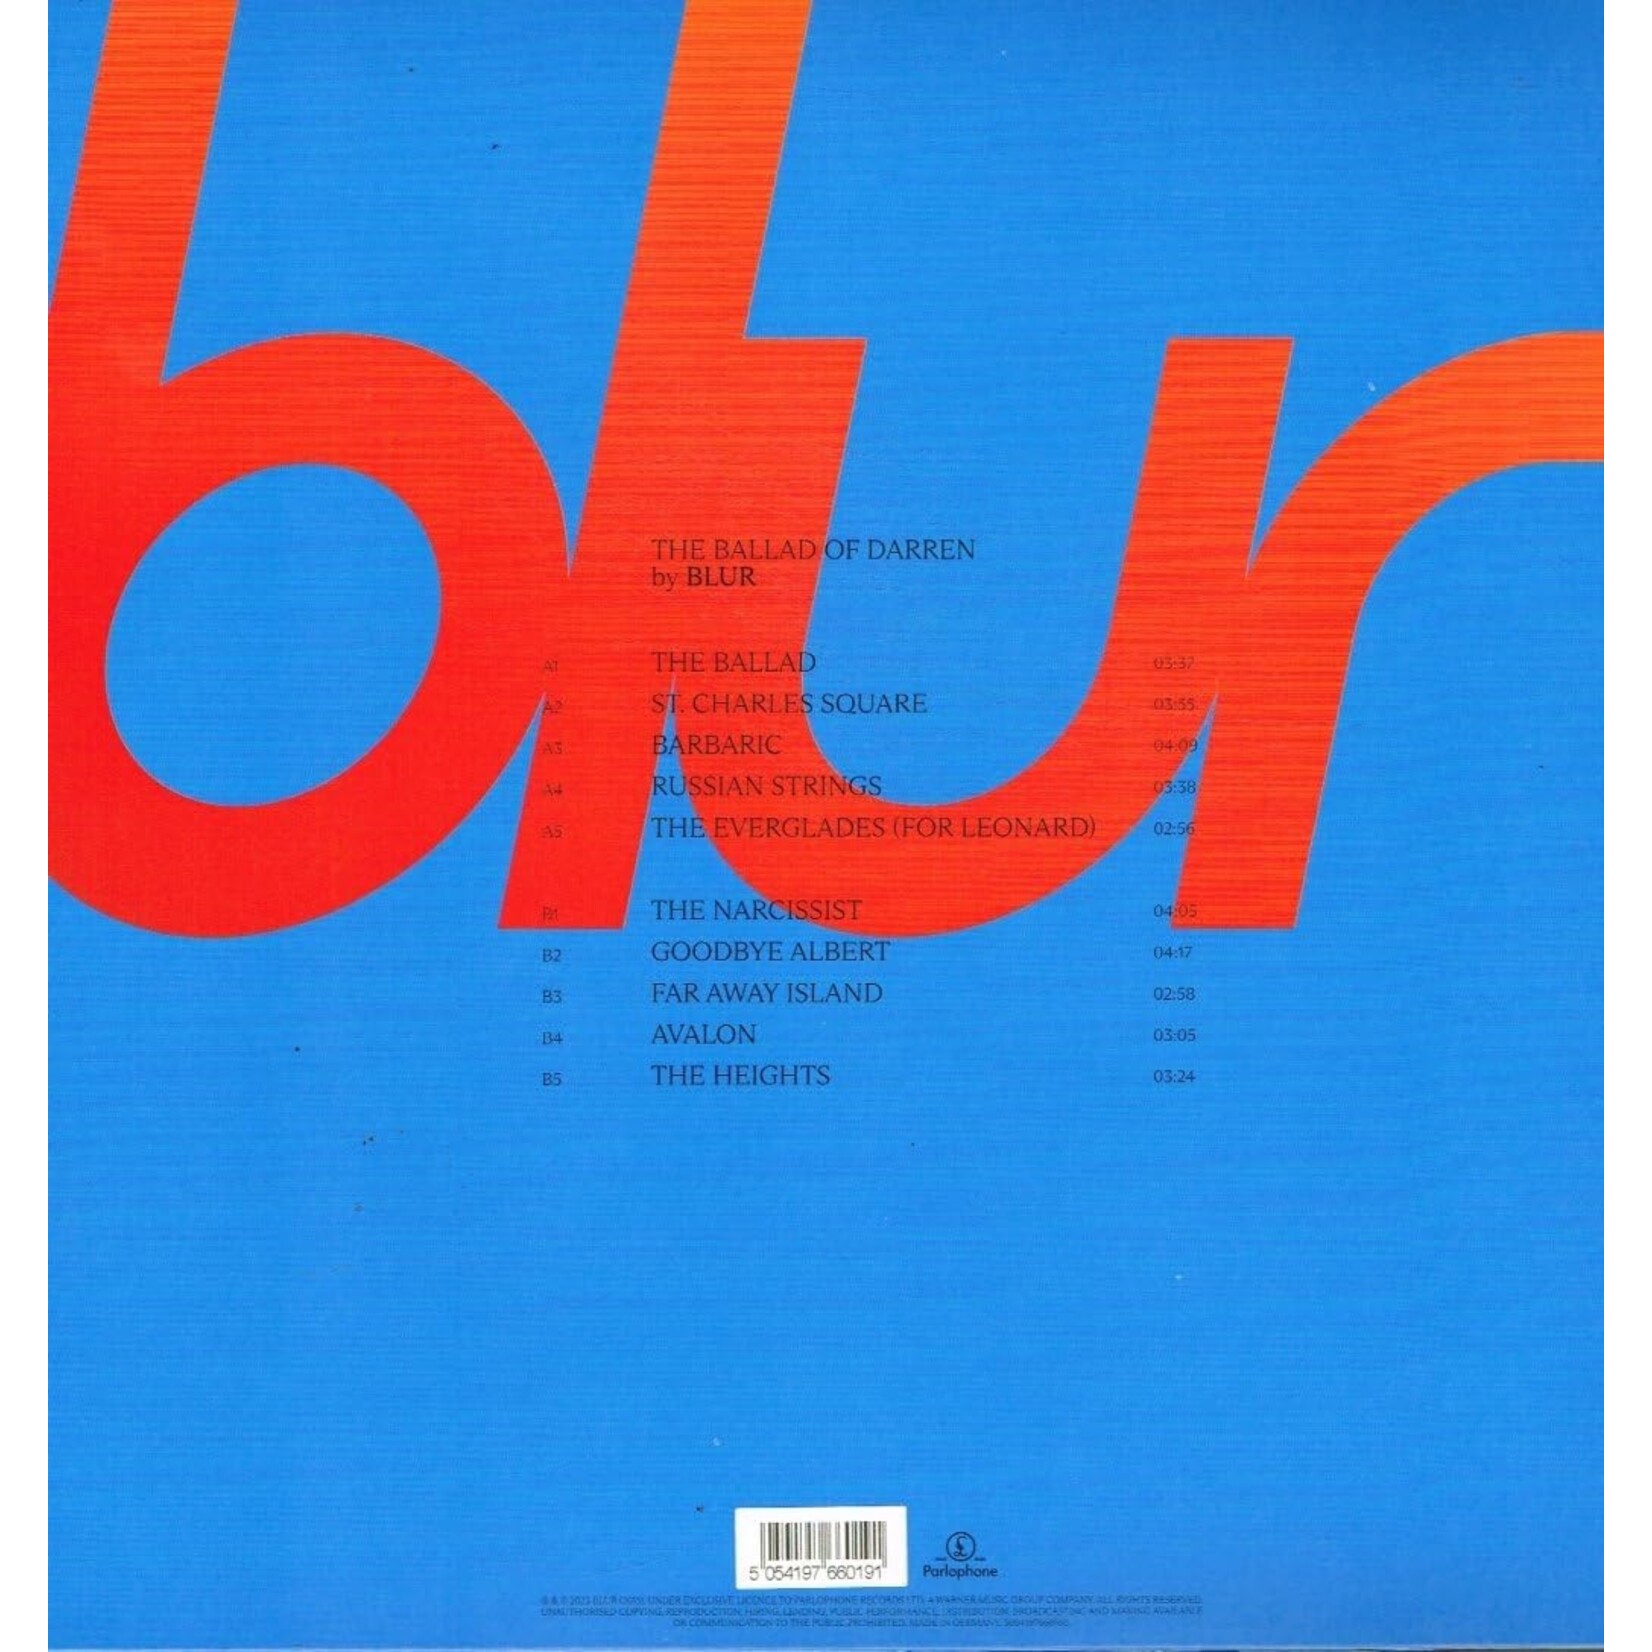 Blur - The Ballad Of Darren Vinyl